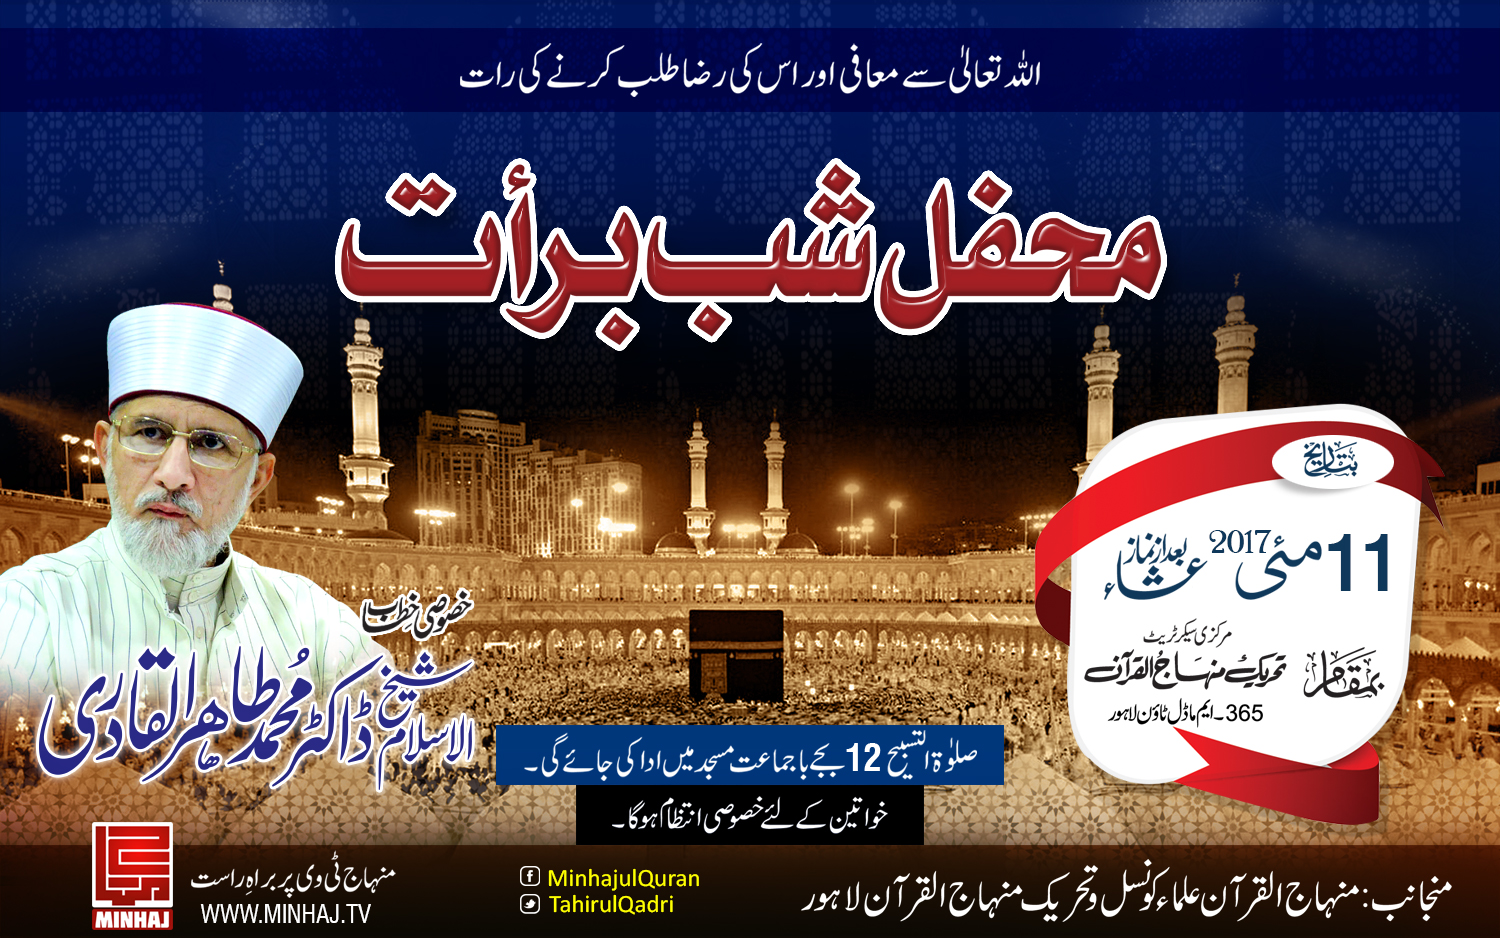 Lahore: MQI to hold Mahfil e Shab-e-Barat on 11th May 2017